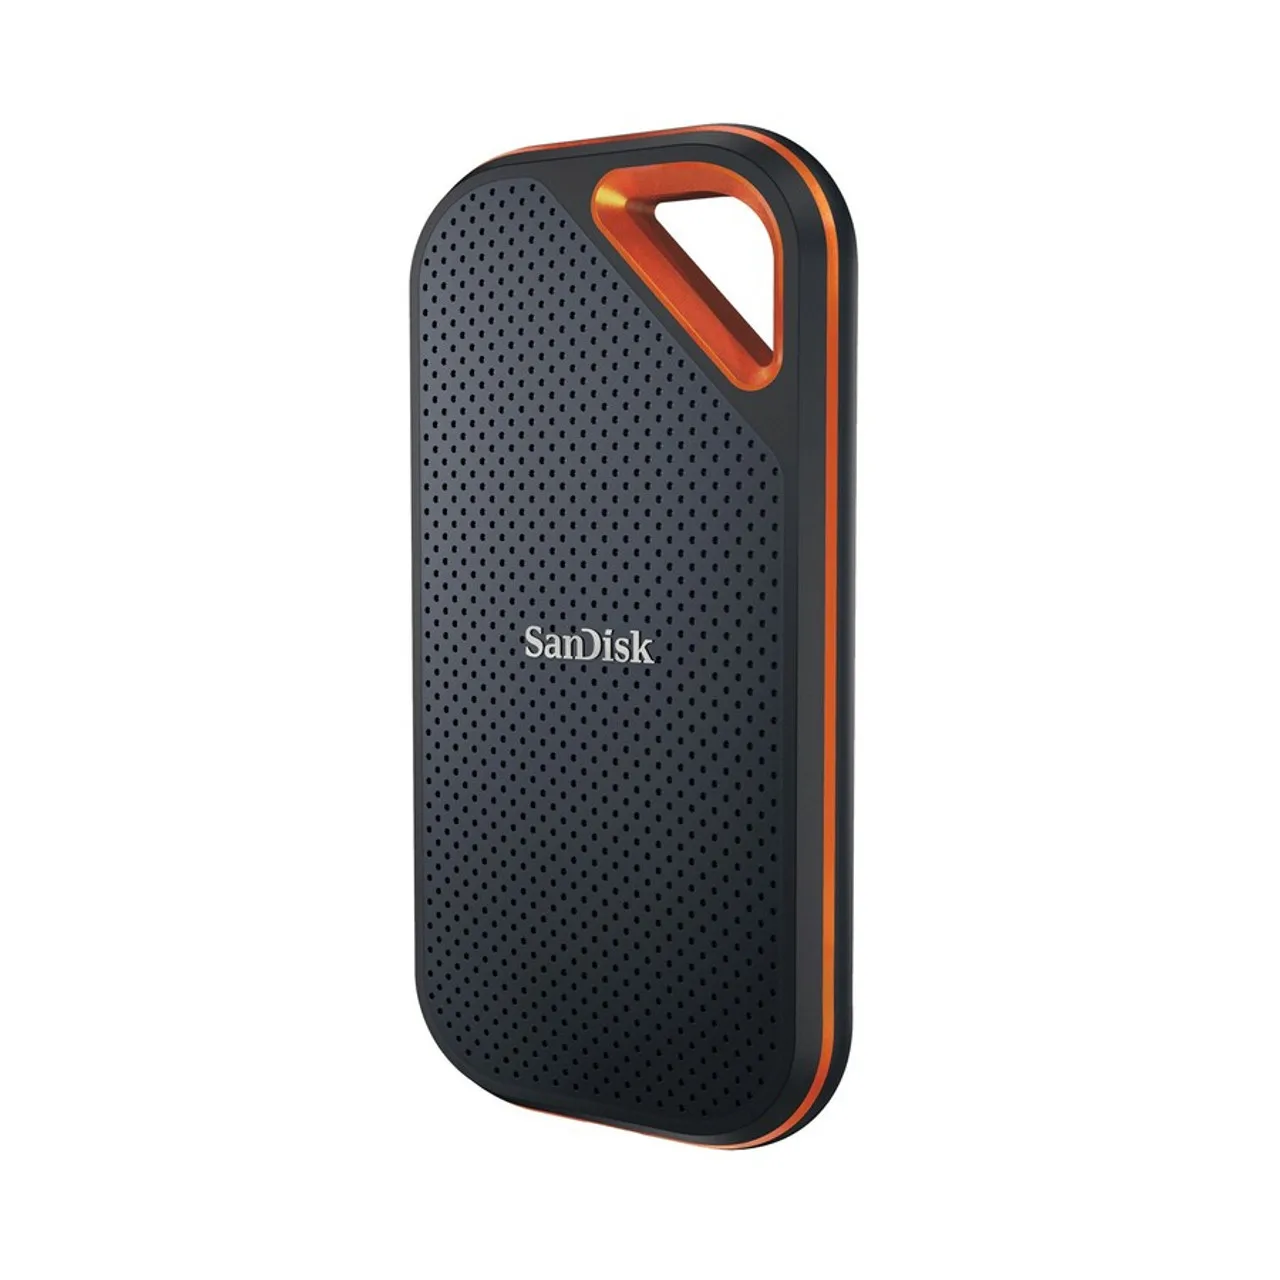 sdssde81-2t00-g25 sandisk extreme pro portable ssd| Alibaba.com